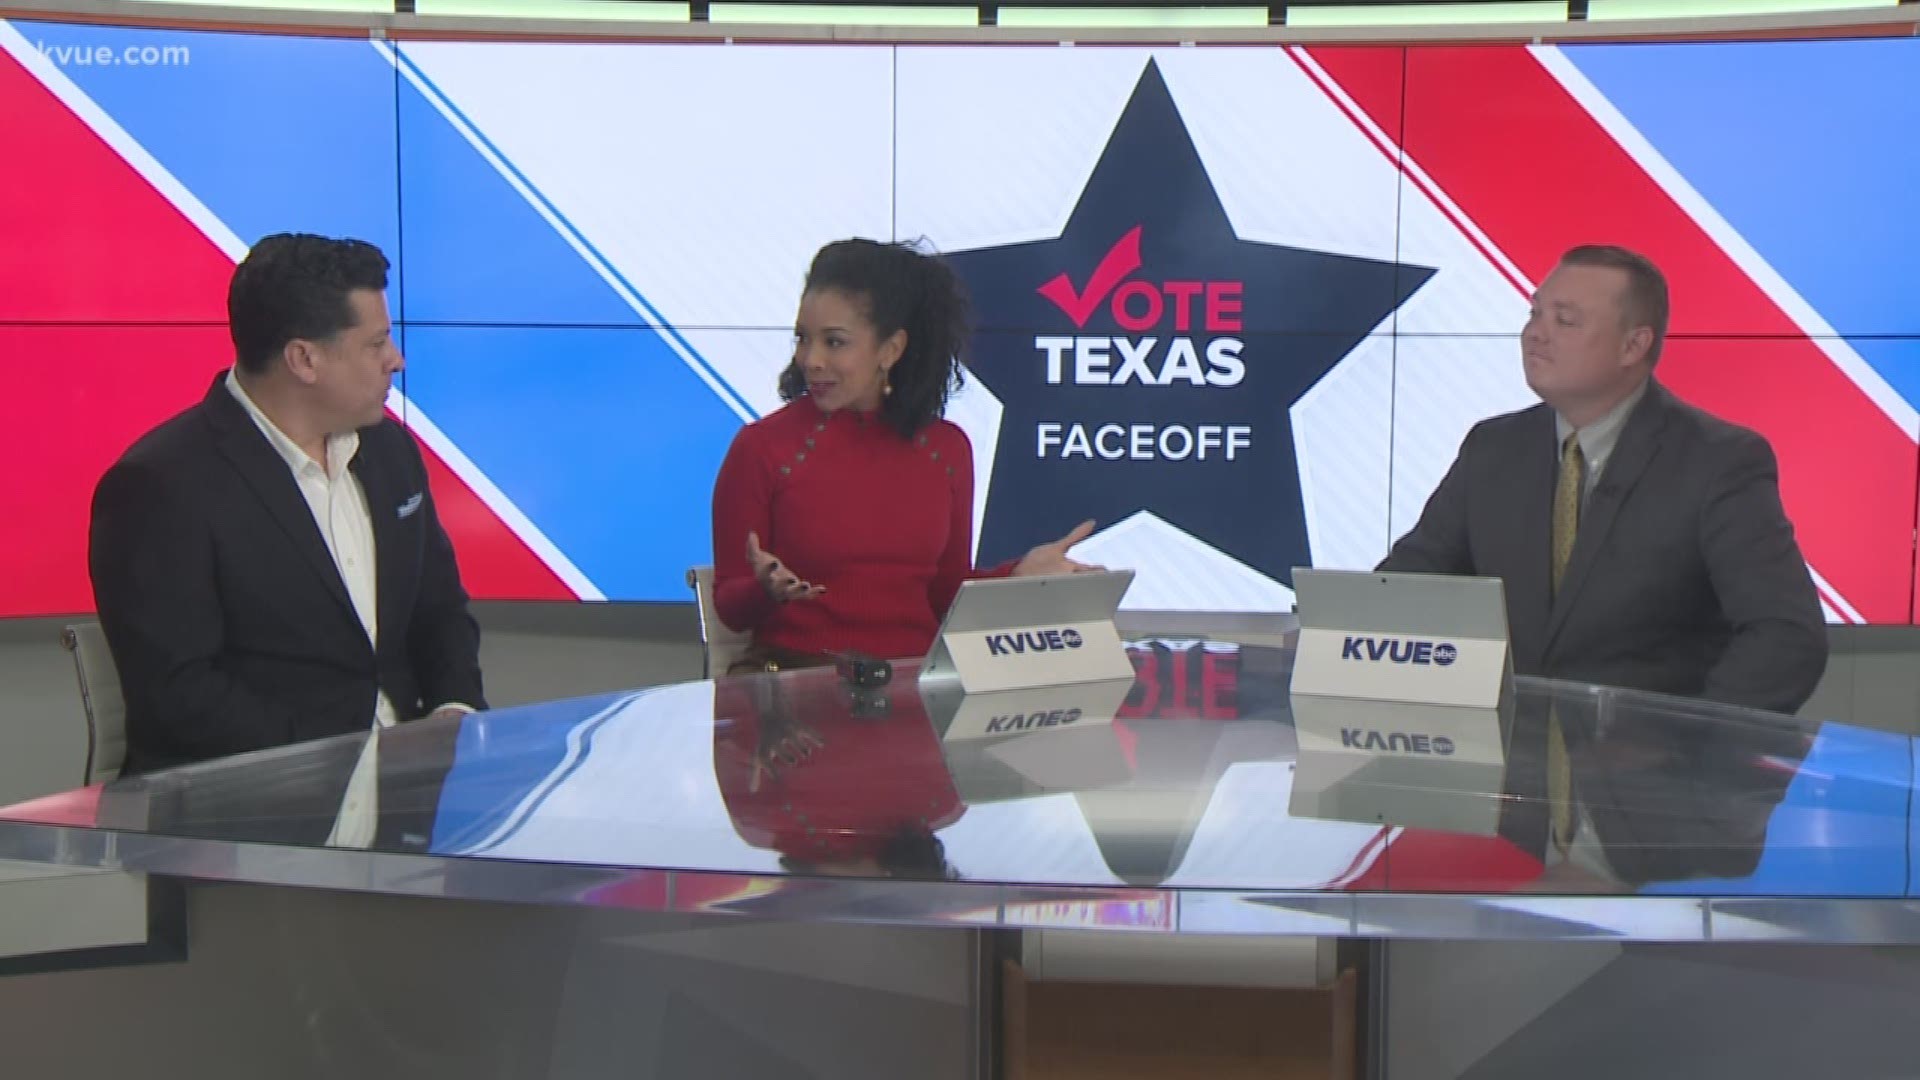 Texas Face Off: Post-election day redcap